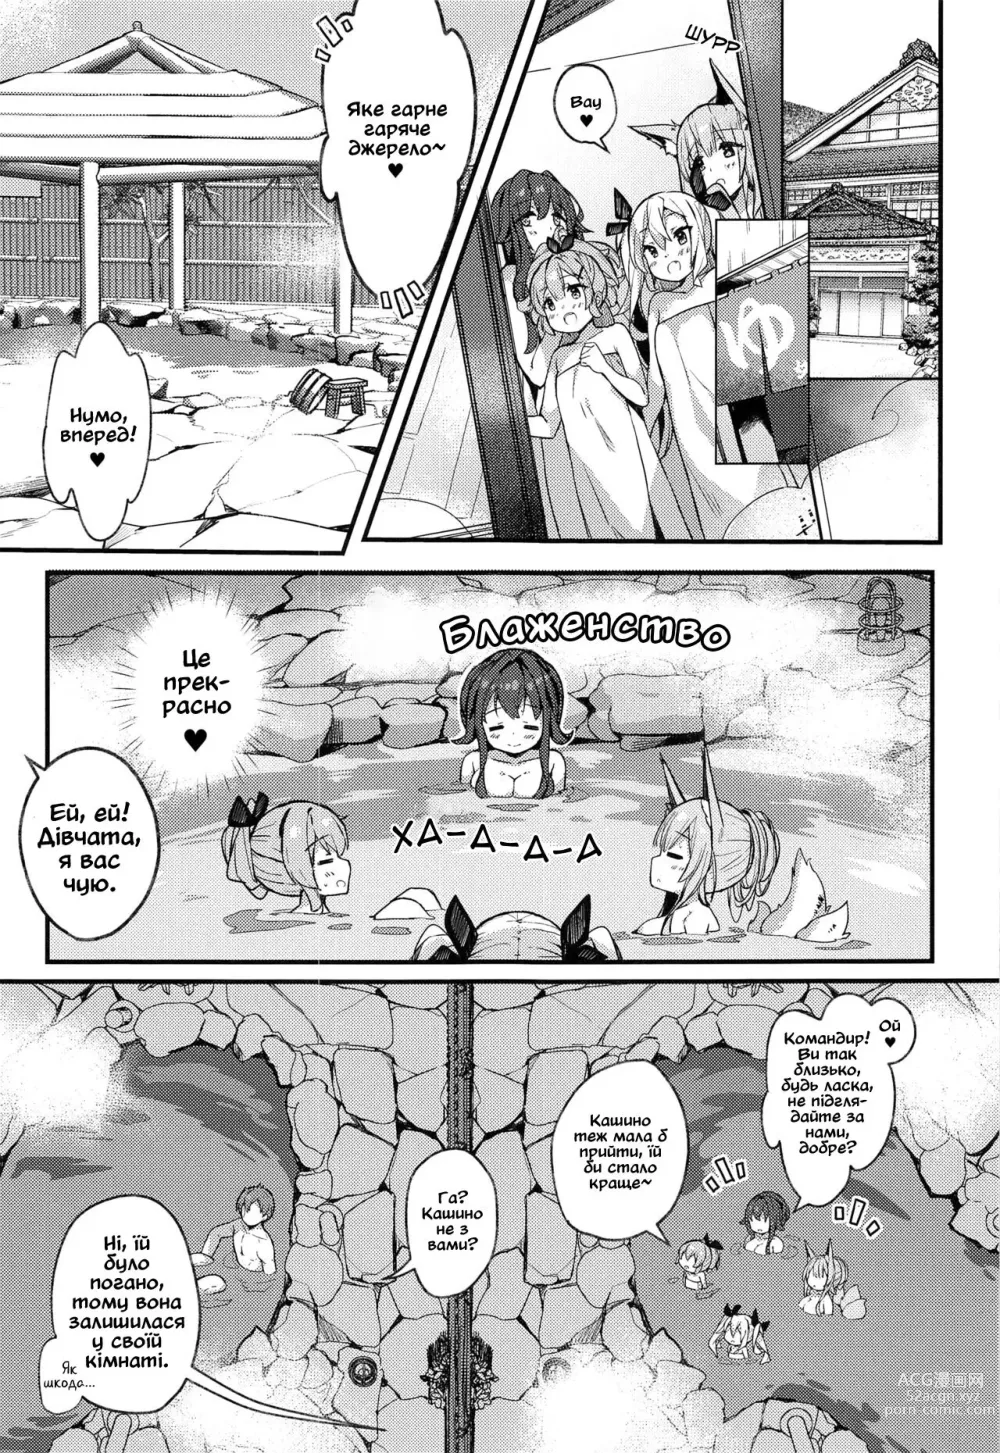 Page 3 of doujinshi На гарячих джерелах із Кашино